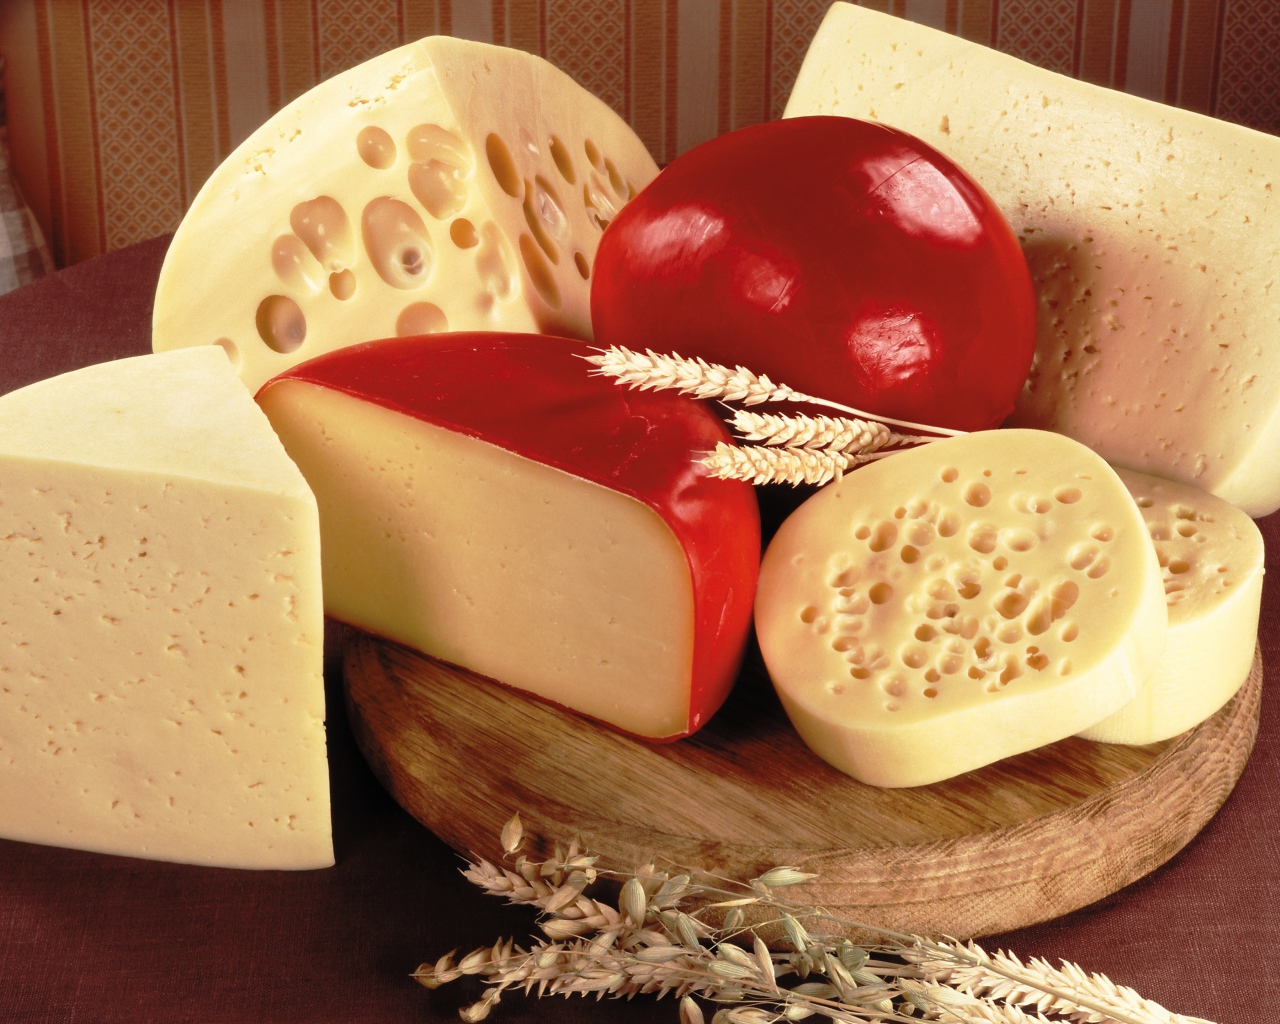 Various grades of cheeses